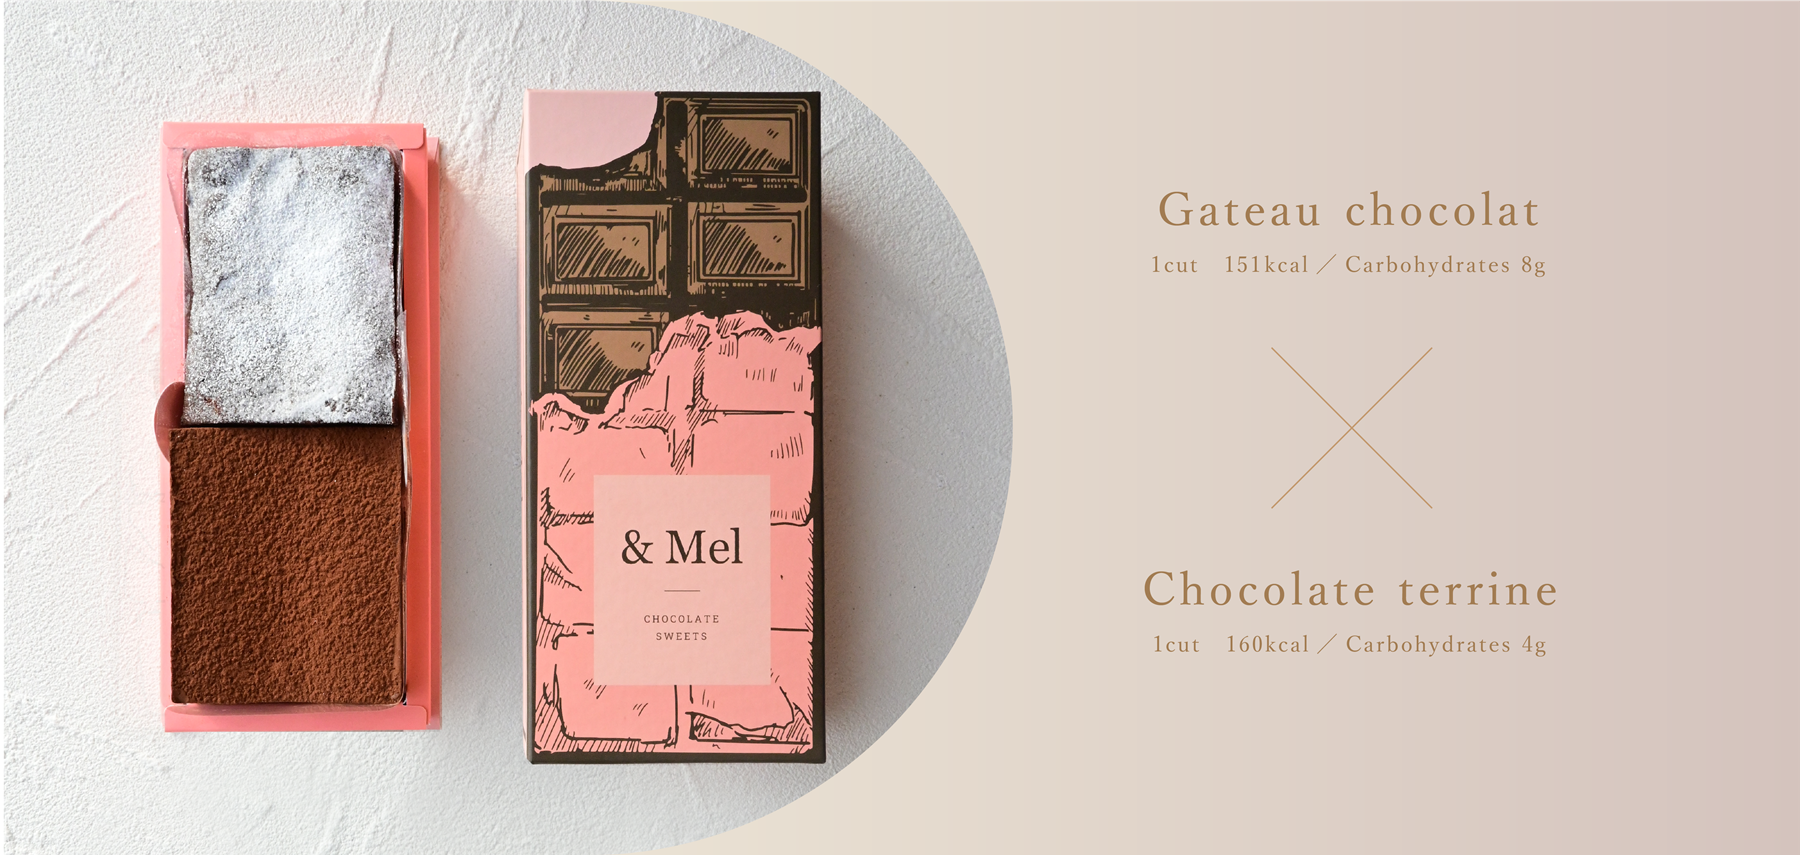 Chocolate terrine & Gateau chocolat